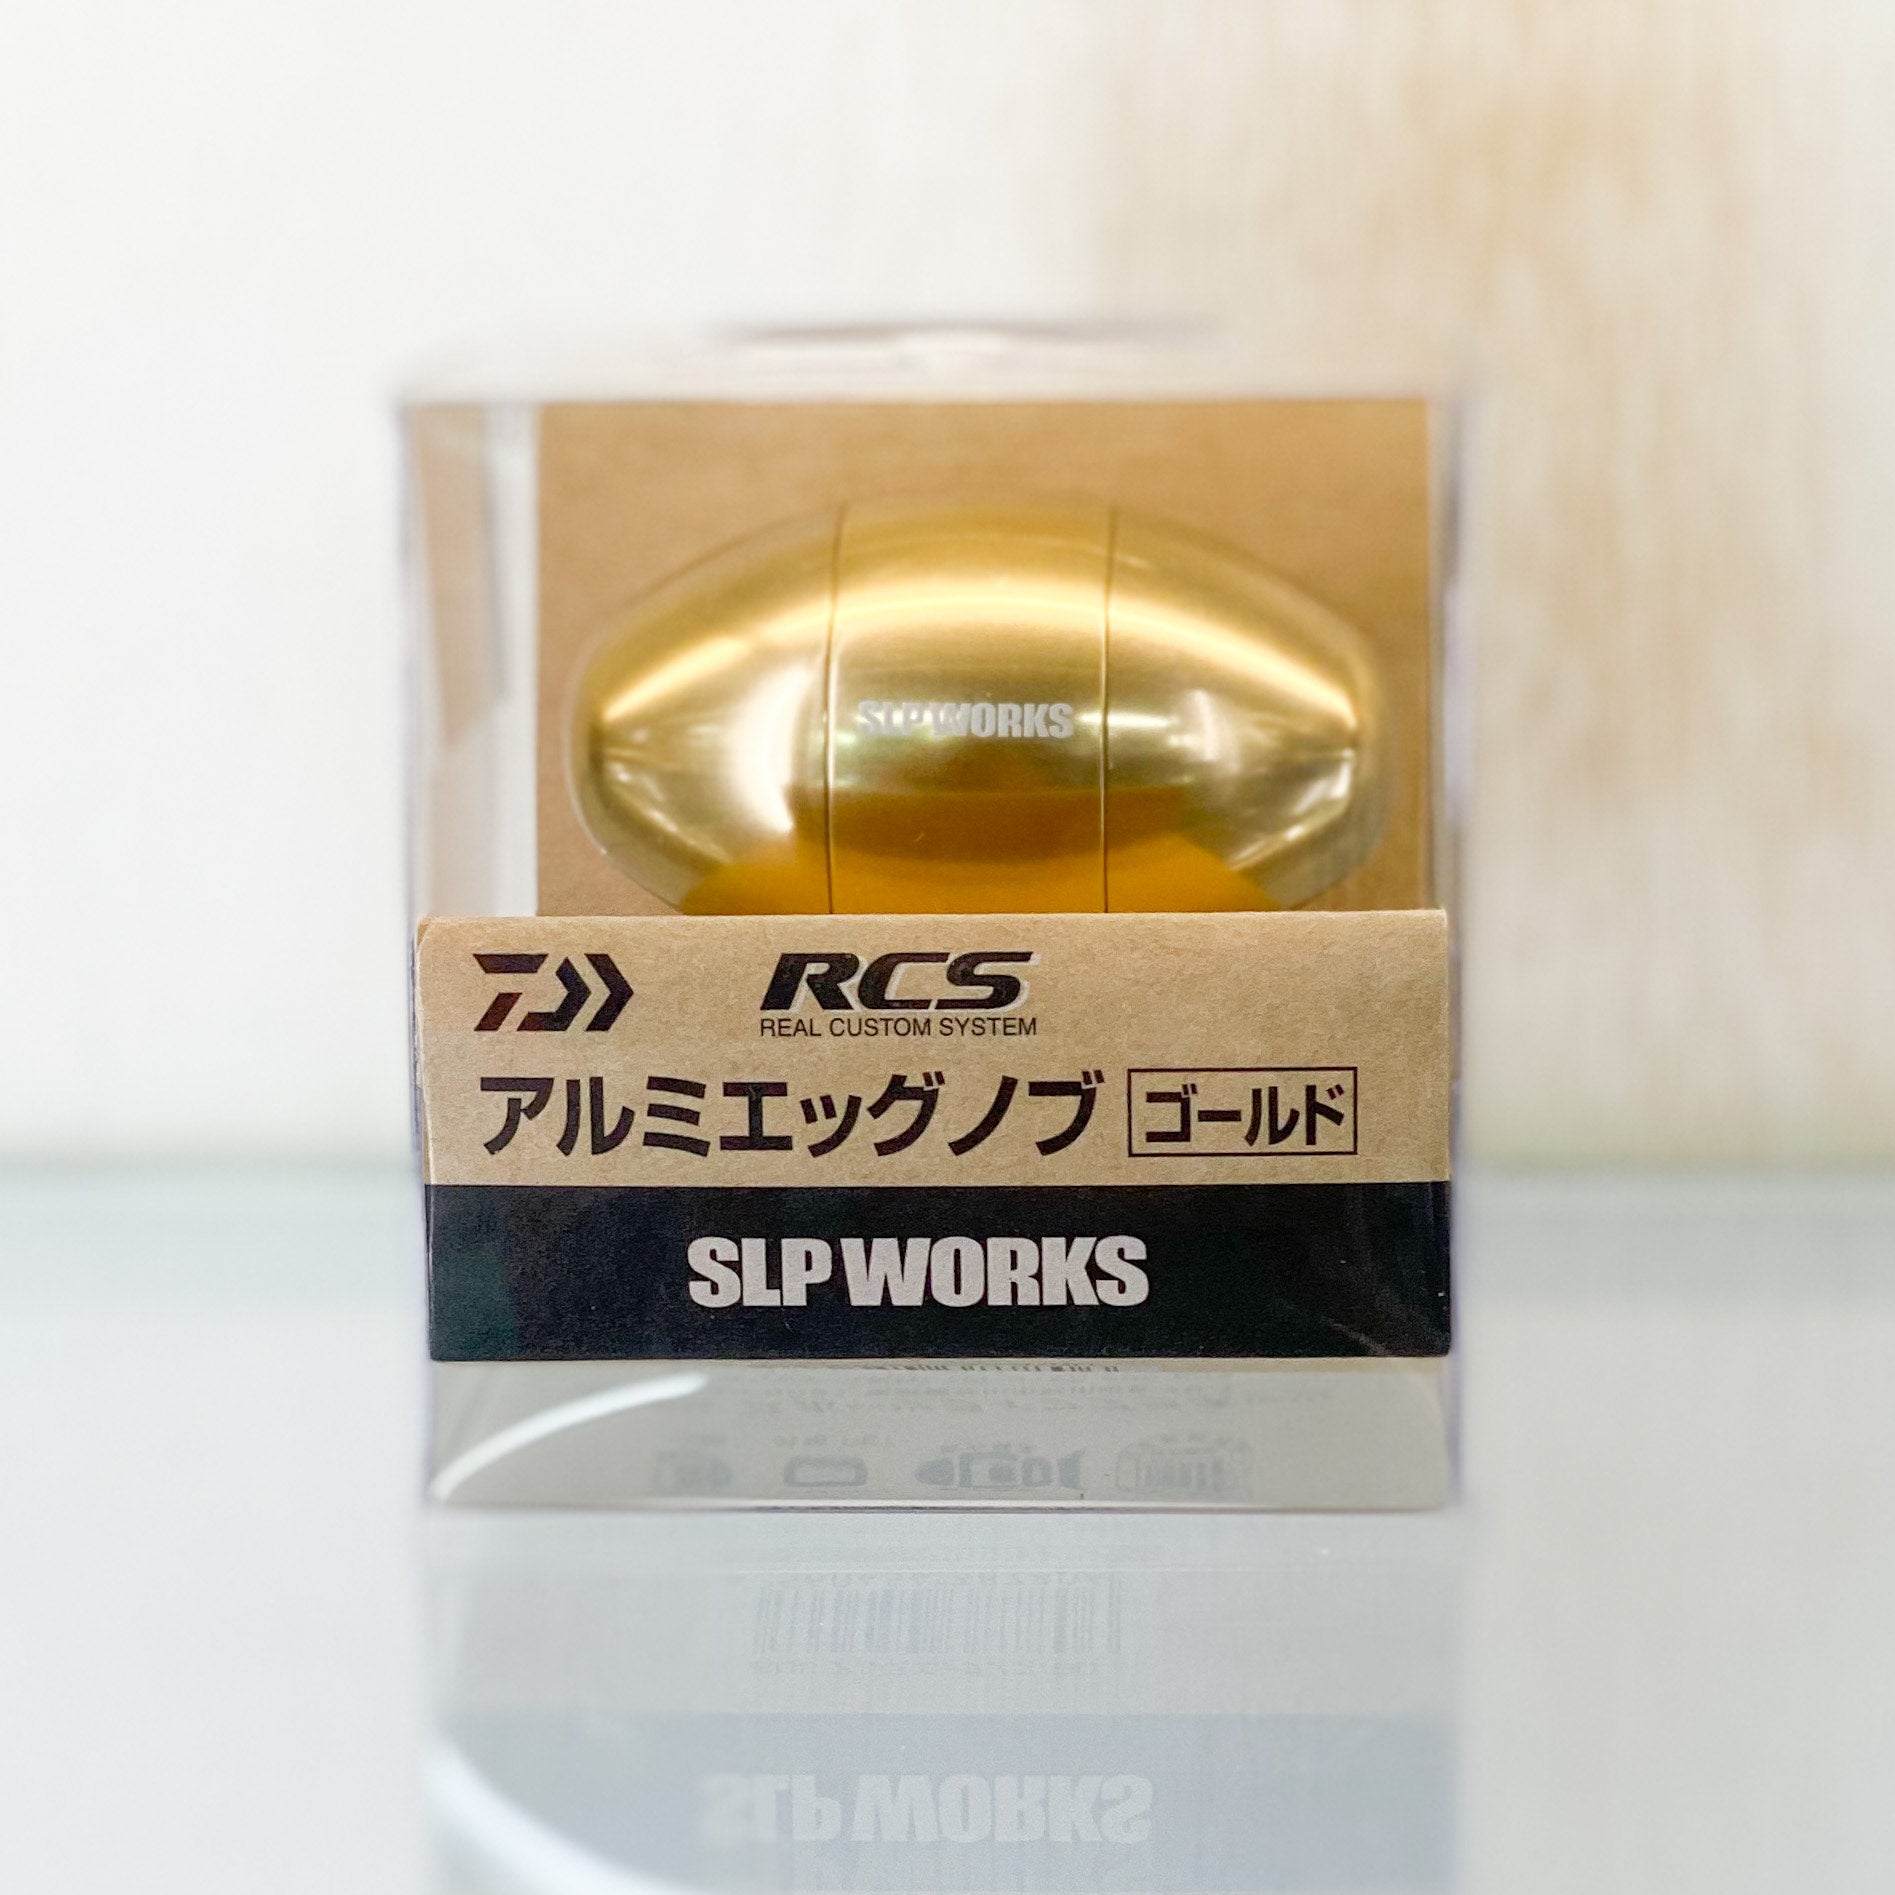 Daiwa RCS SLP Works Gold Egg Power Knob